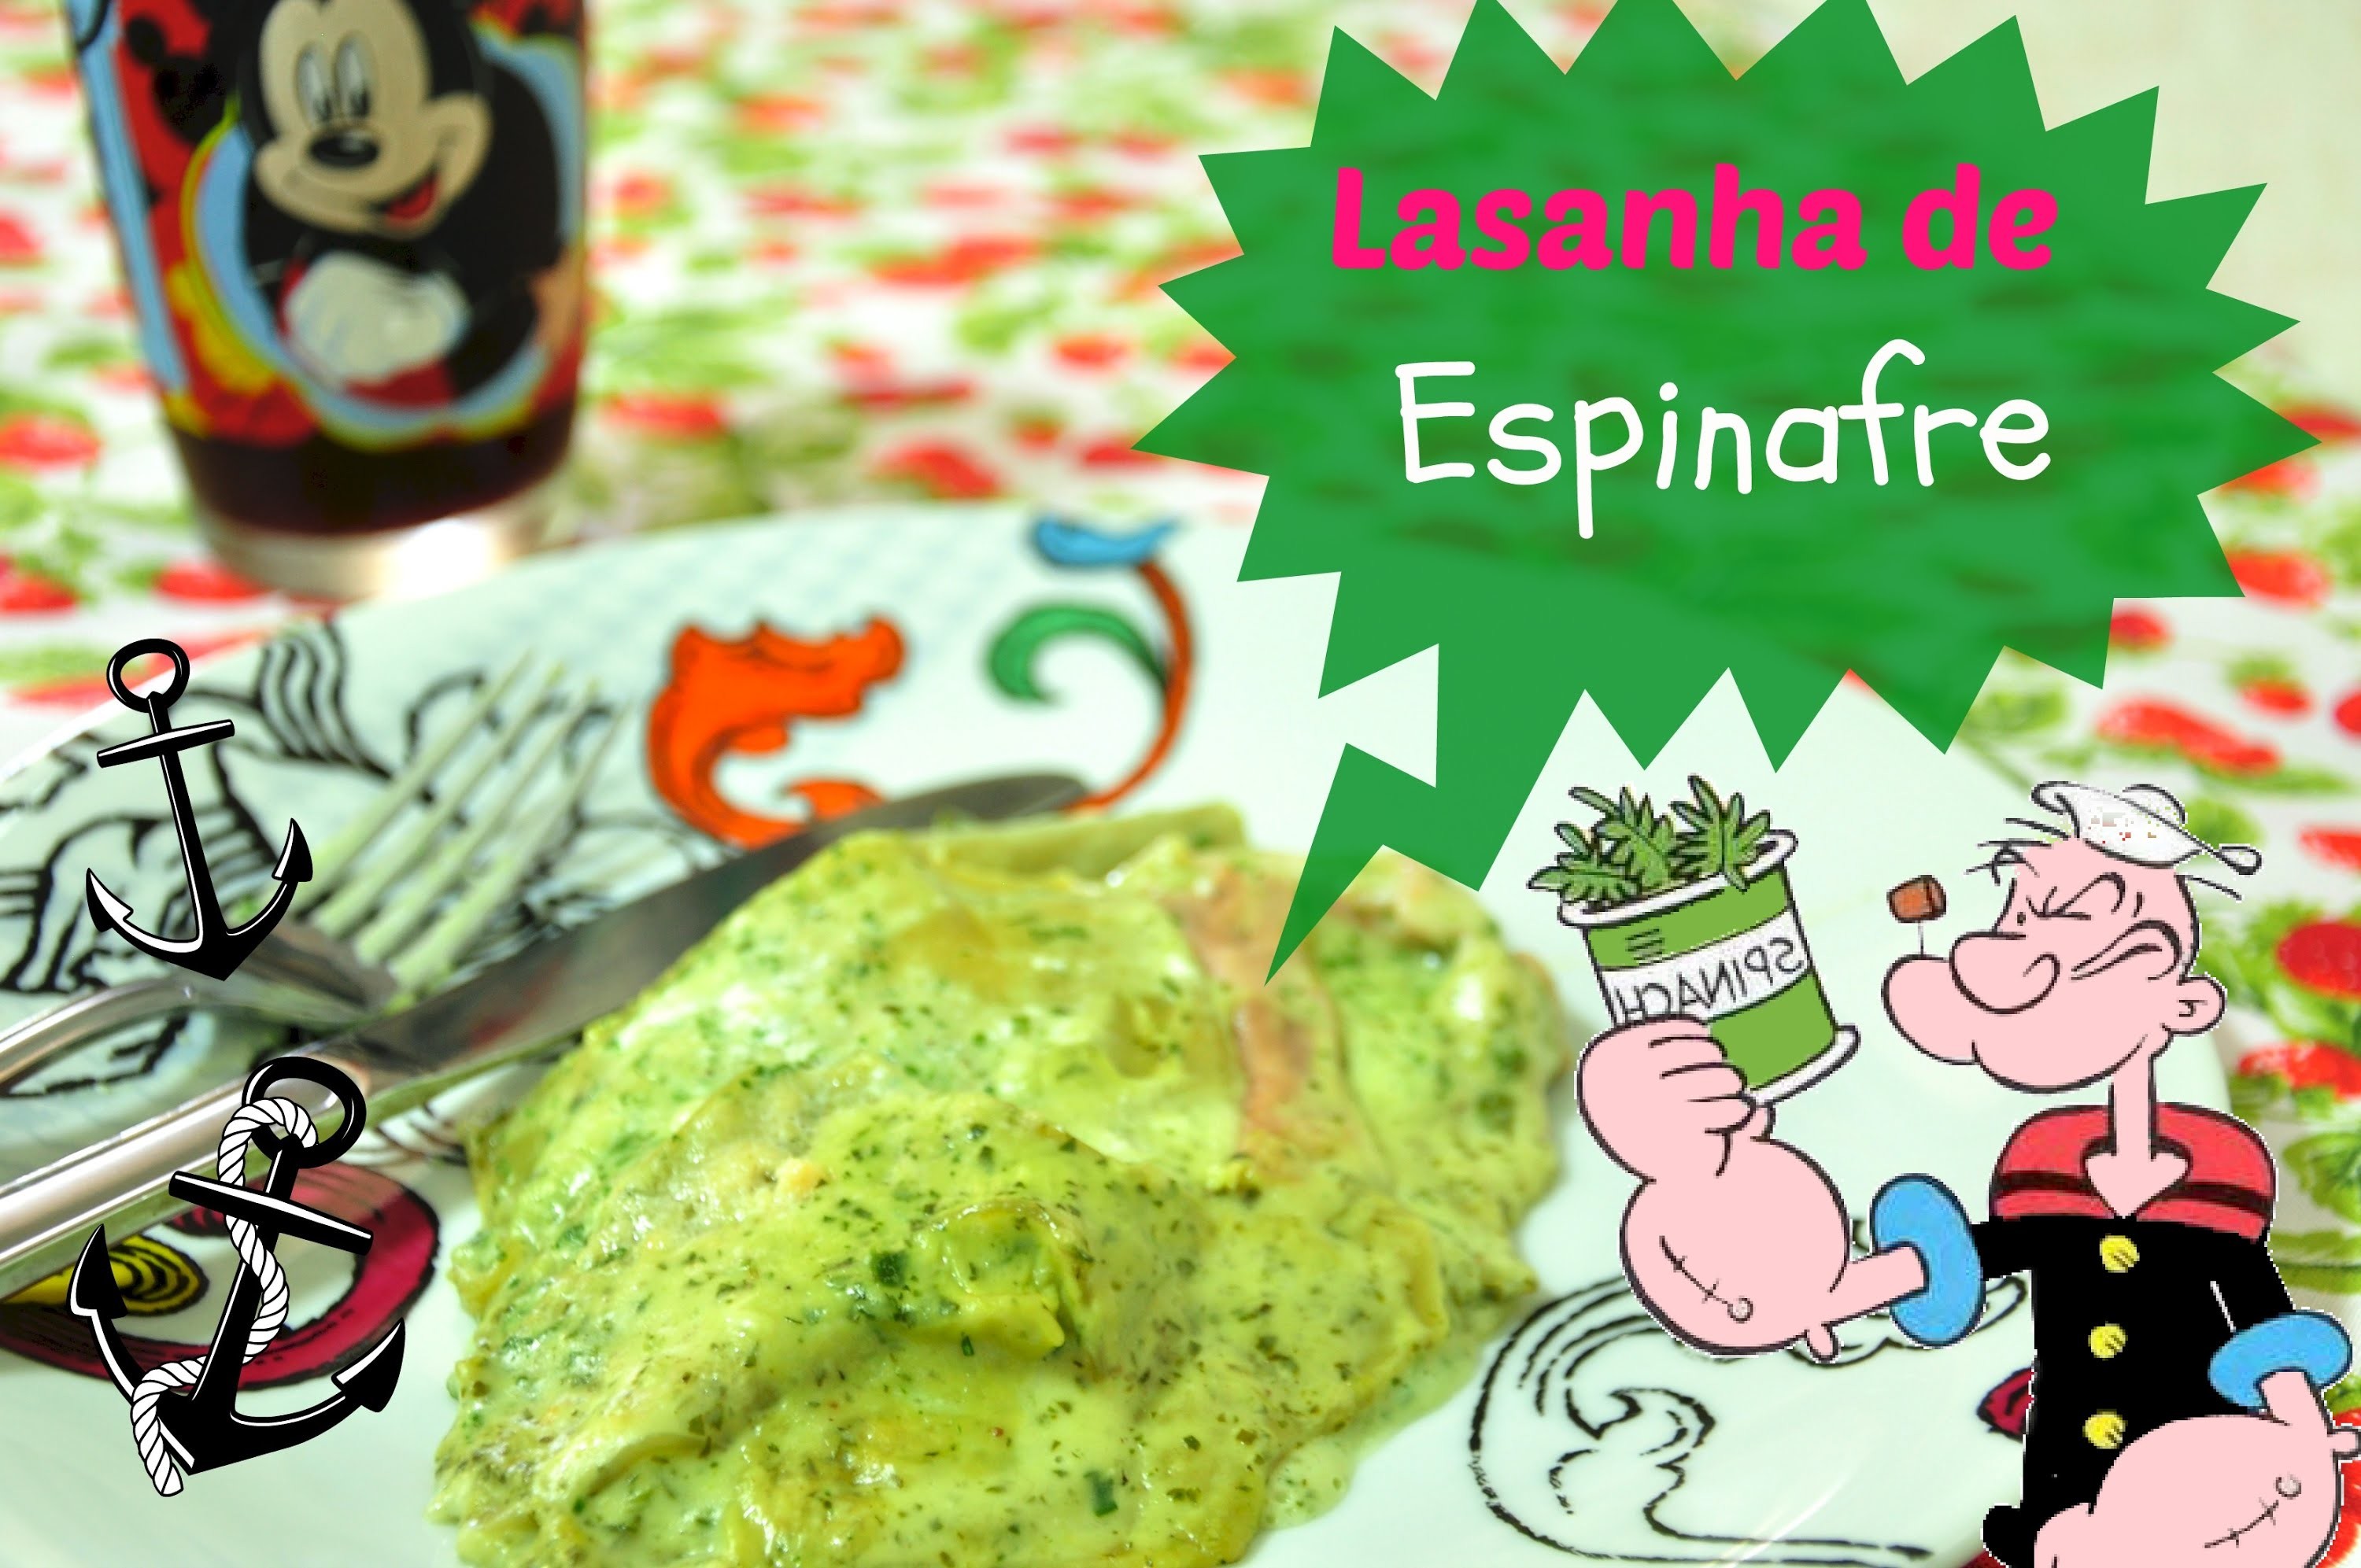 Lasanha de espinafre receita (Spinach Lasagne) | Avental com Farinha #13